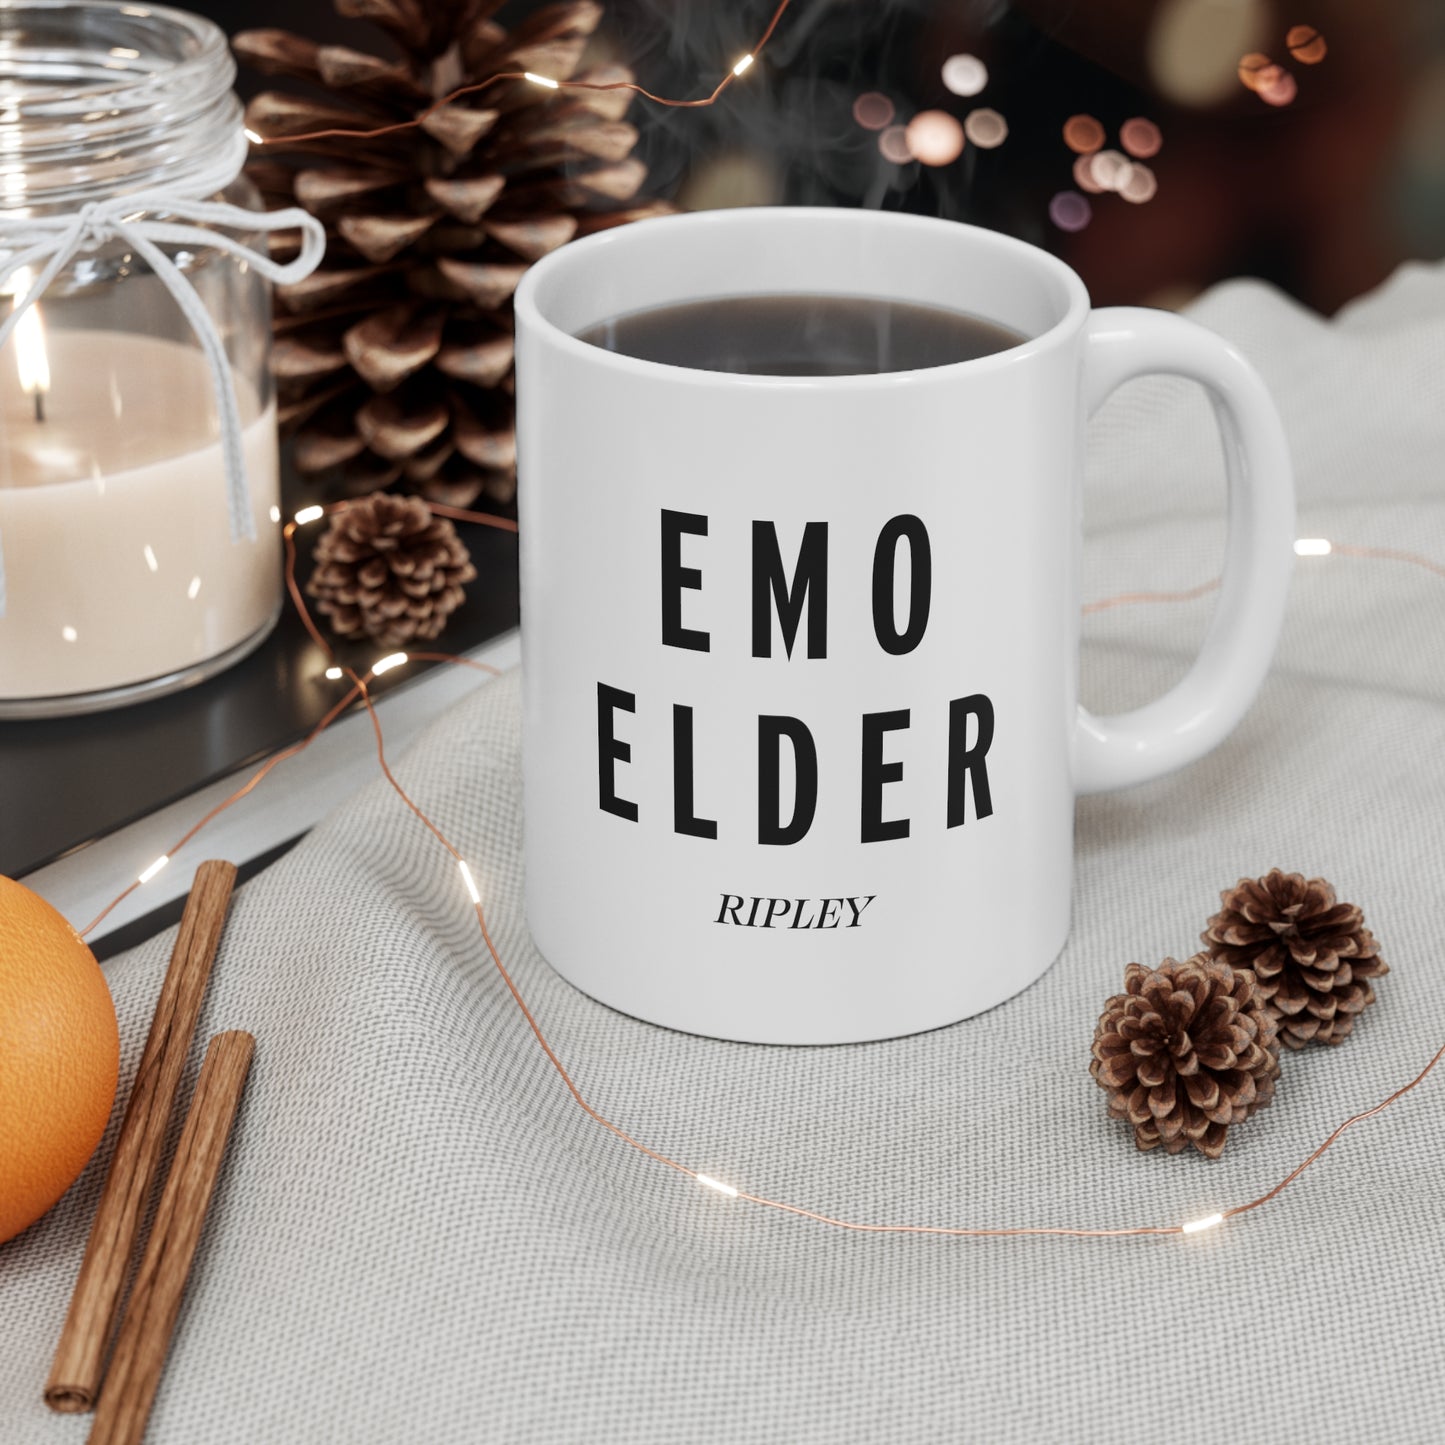 Emo Elder White Mug 11oz